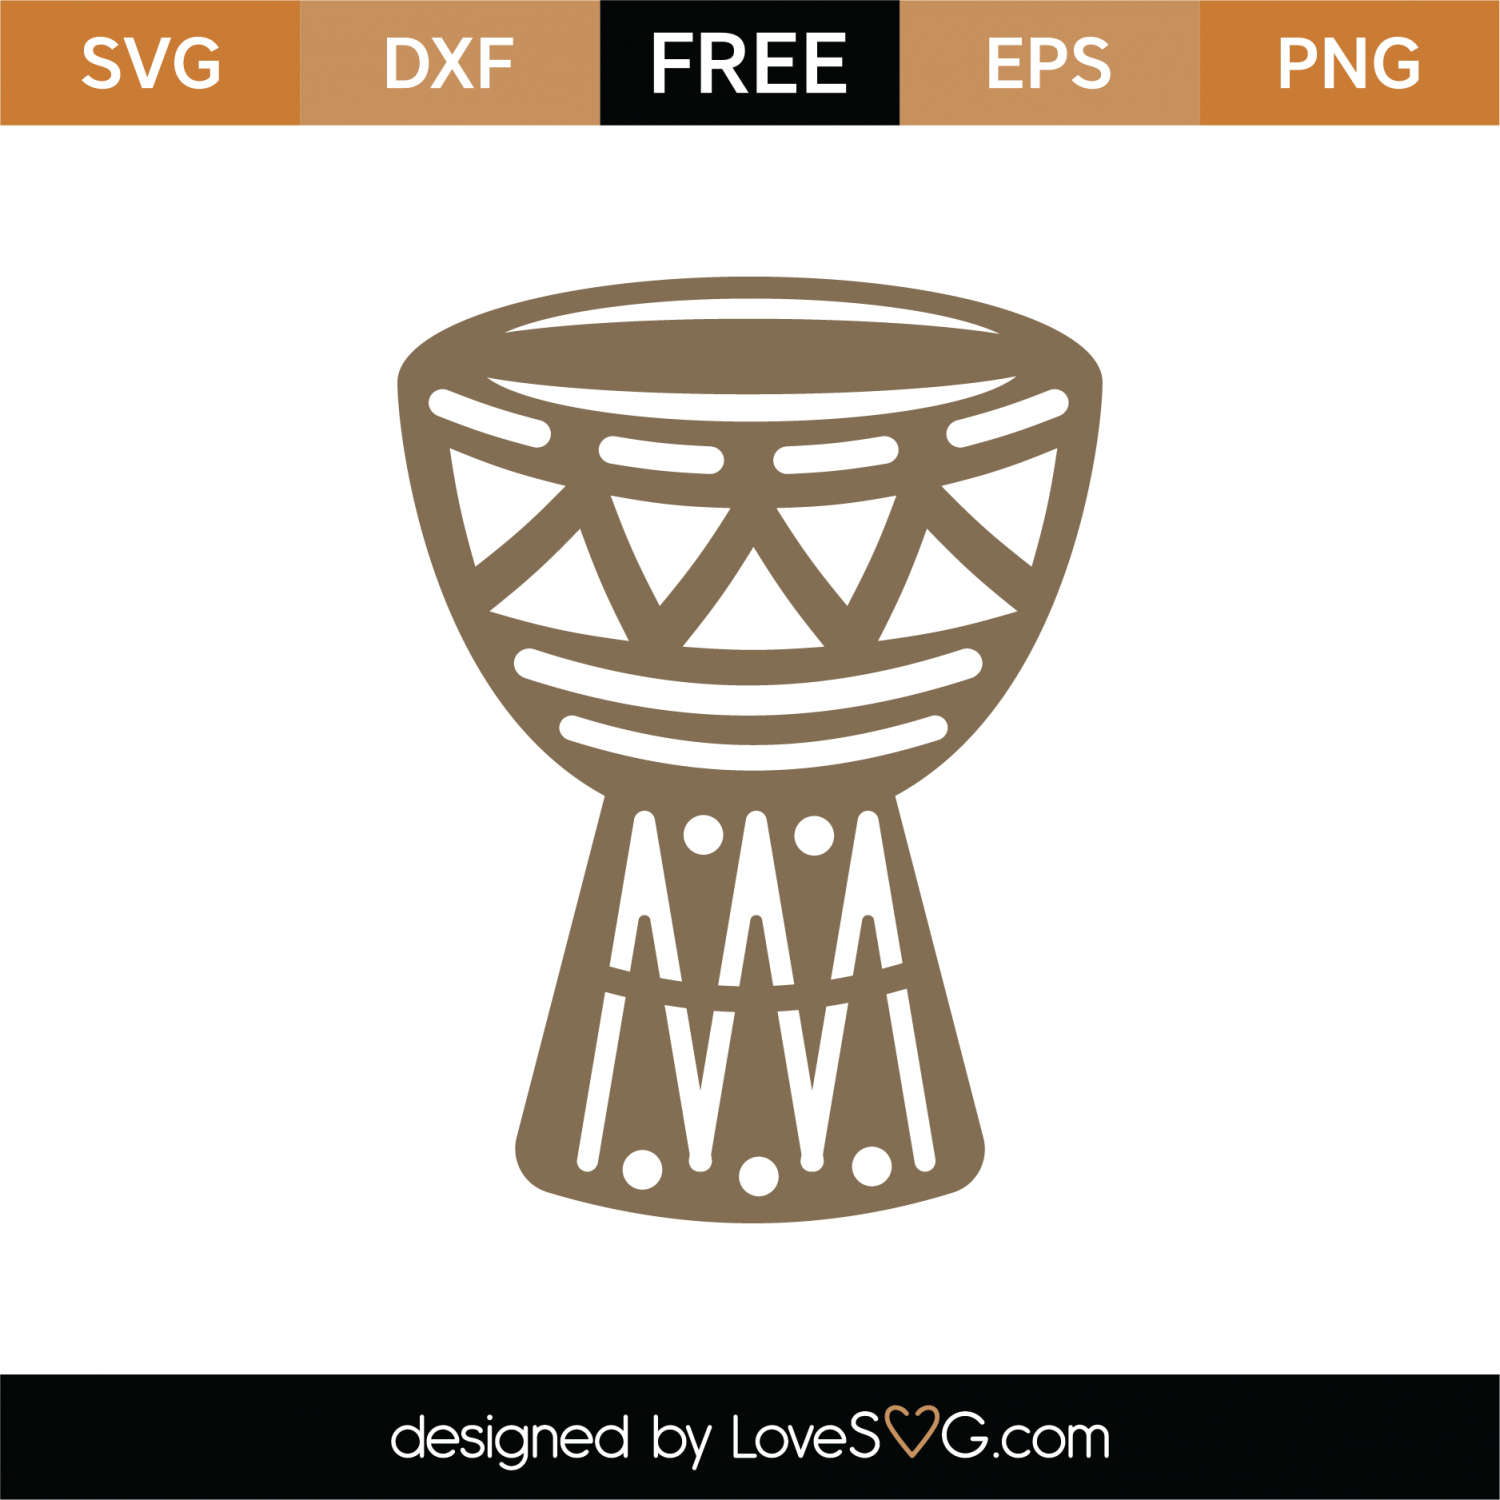 Download Free Djembe African Drum SVG Cut File | Lovesvg.com